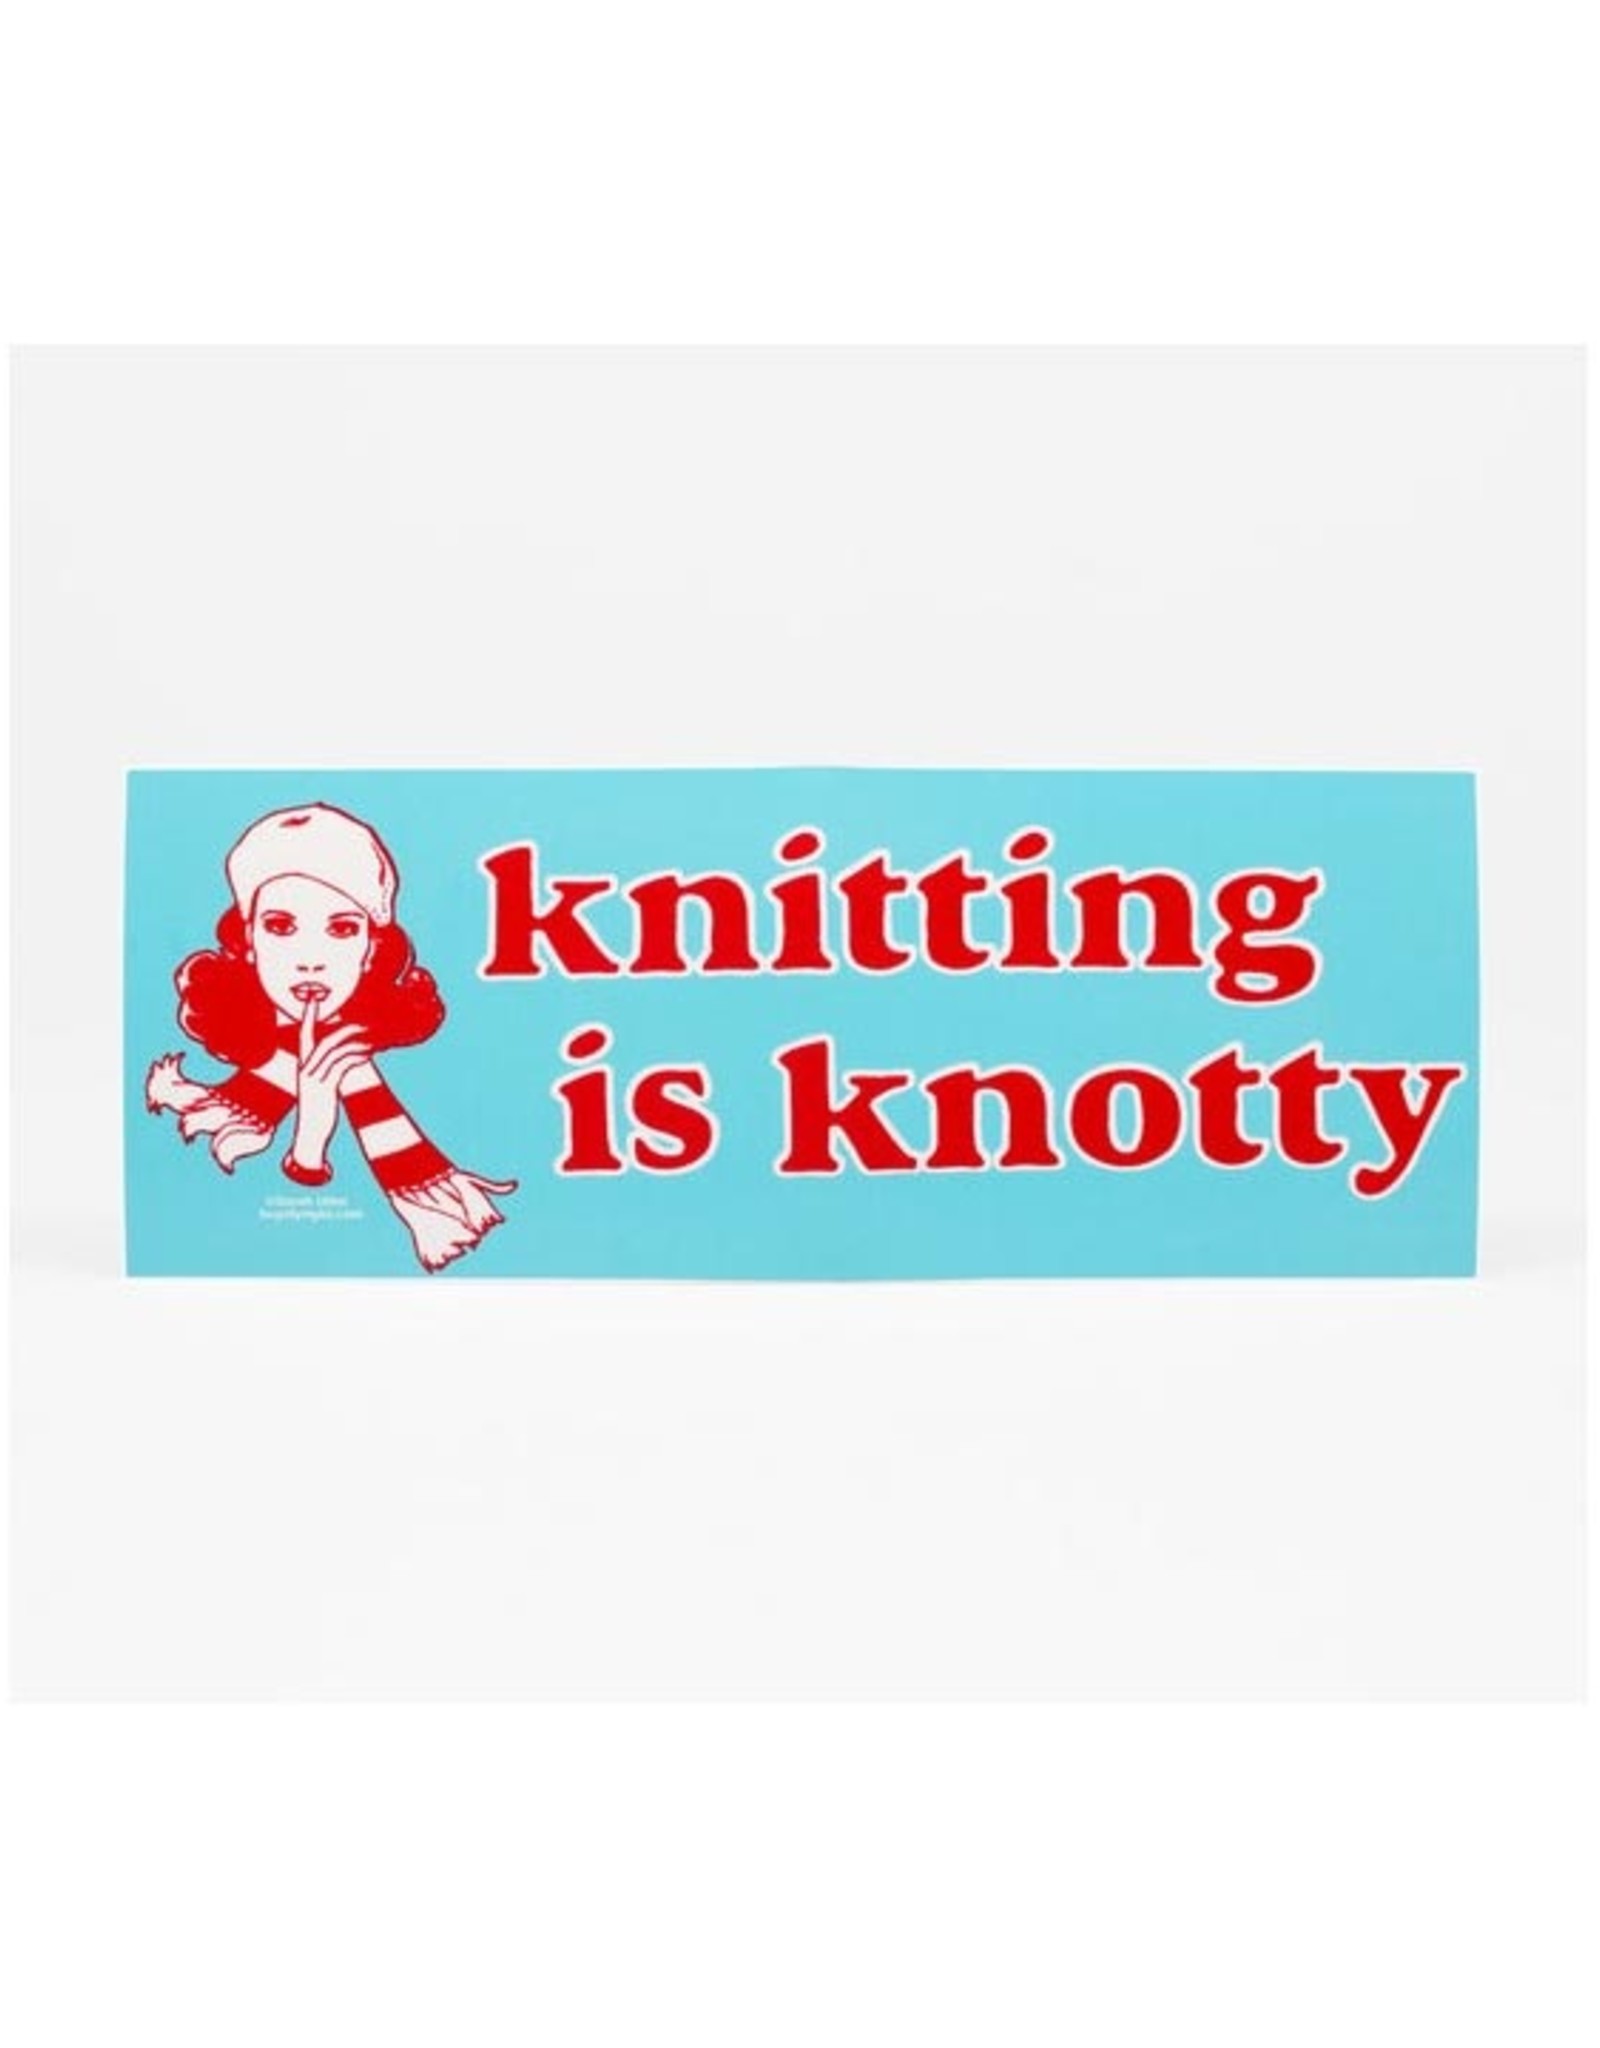 Knitting is Knotty Bumper Sticker